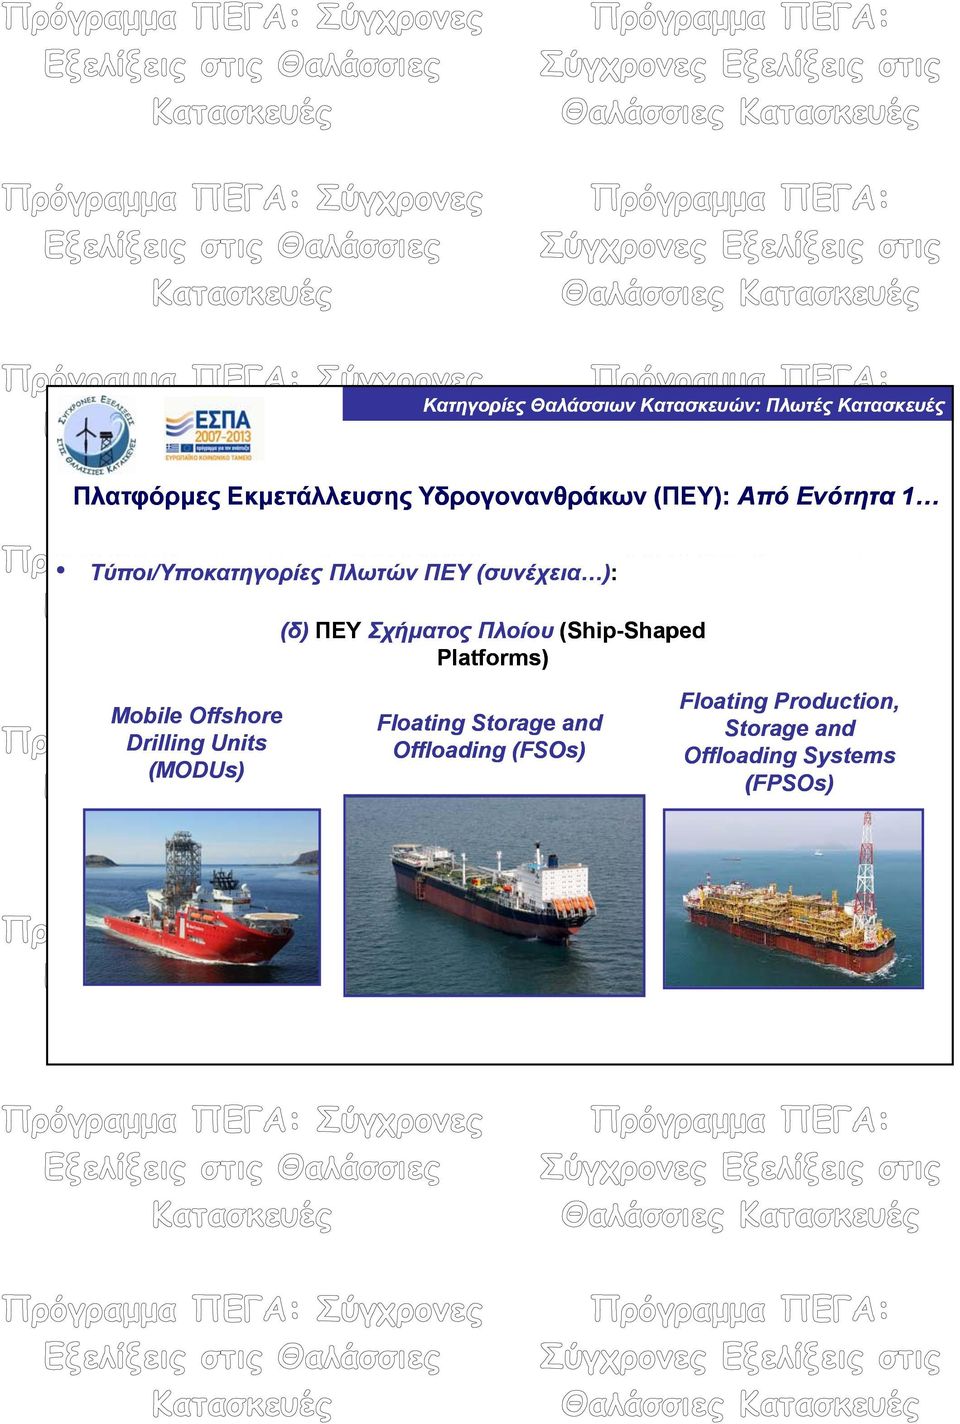 (Ship-Shaped Shaped Platforms) Mobile Offshore Drilling Units (MODUs)